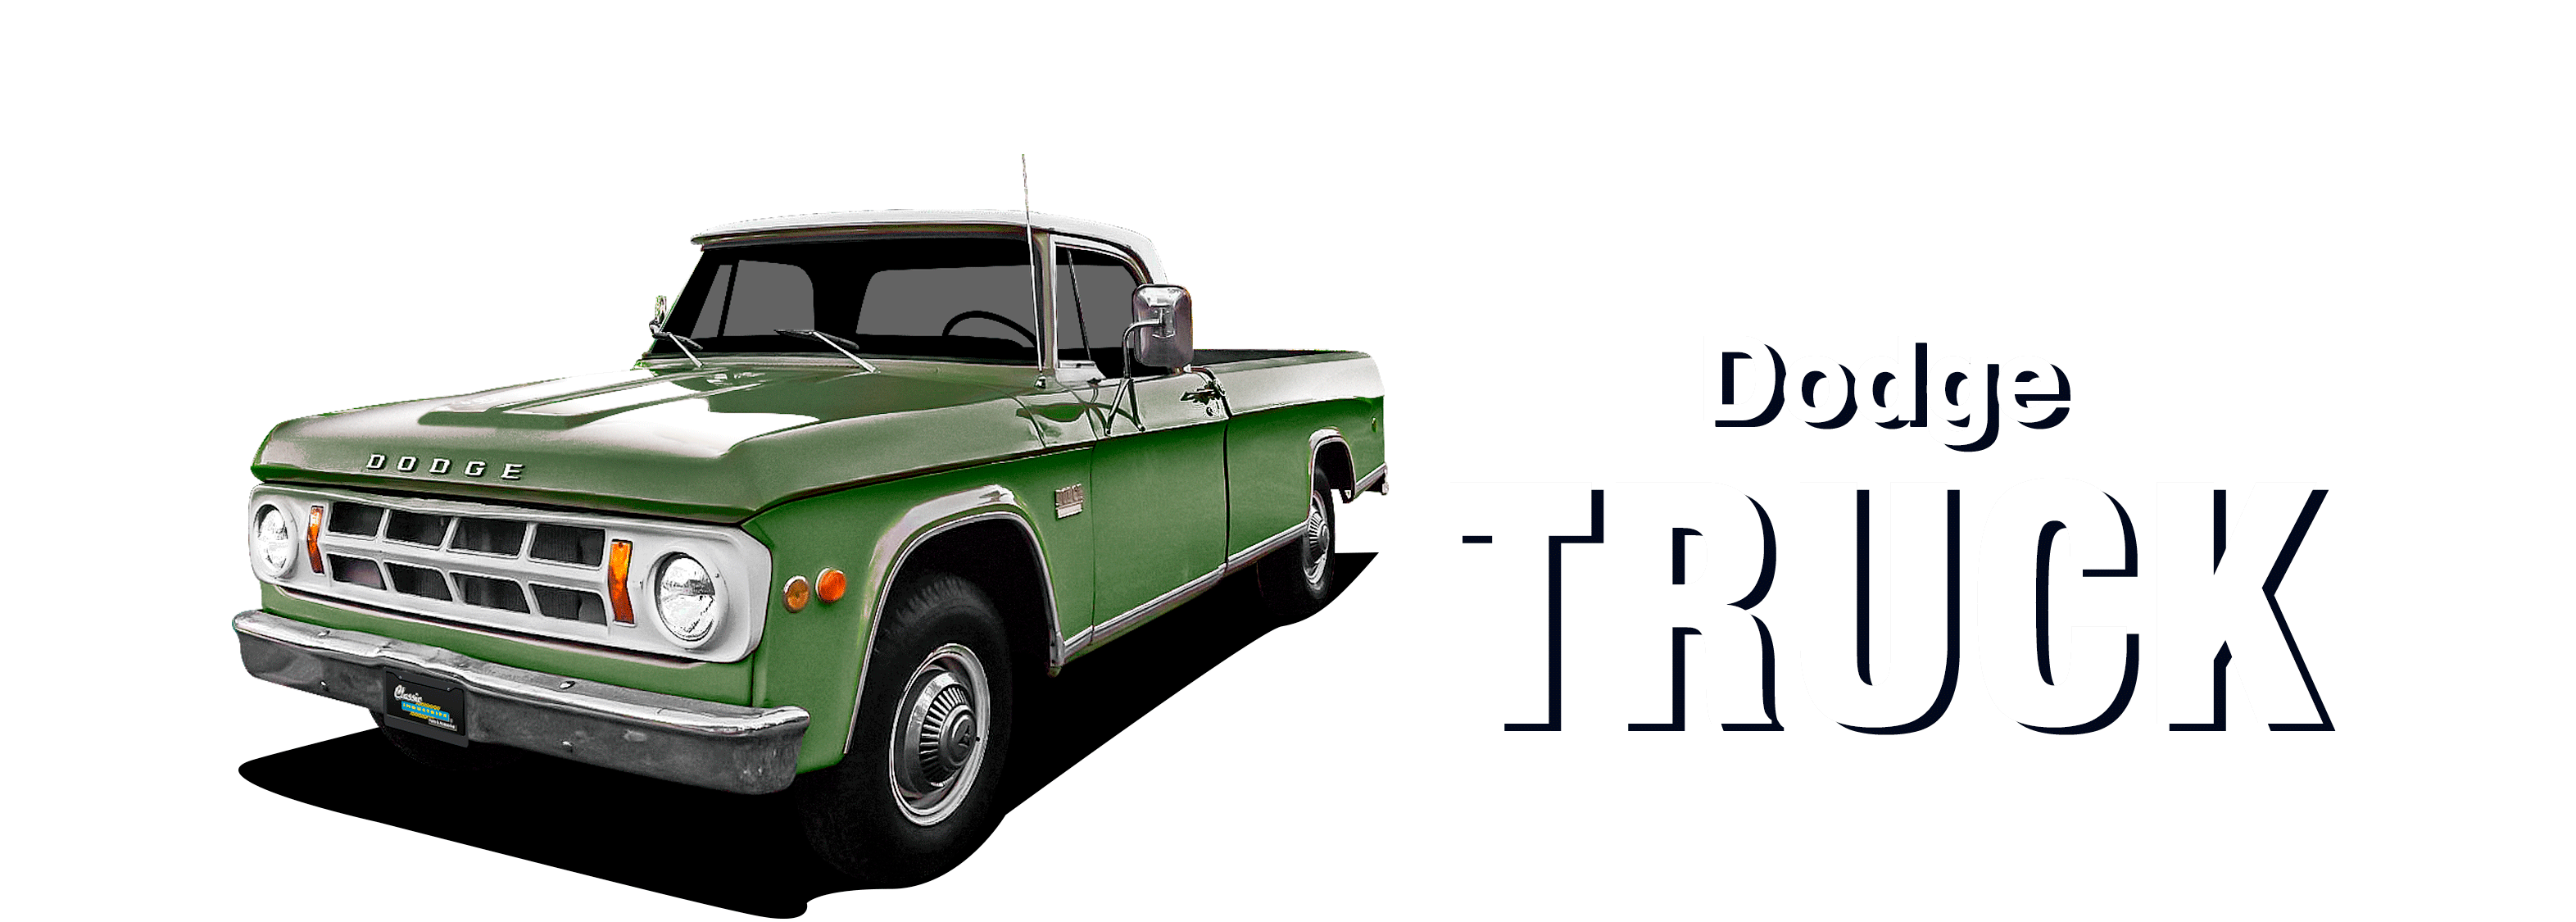 1965-71 Dodge Truck